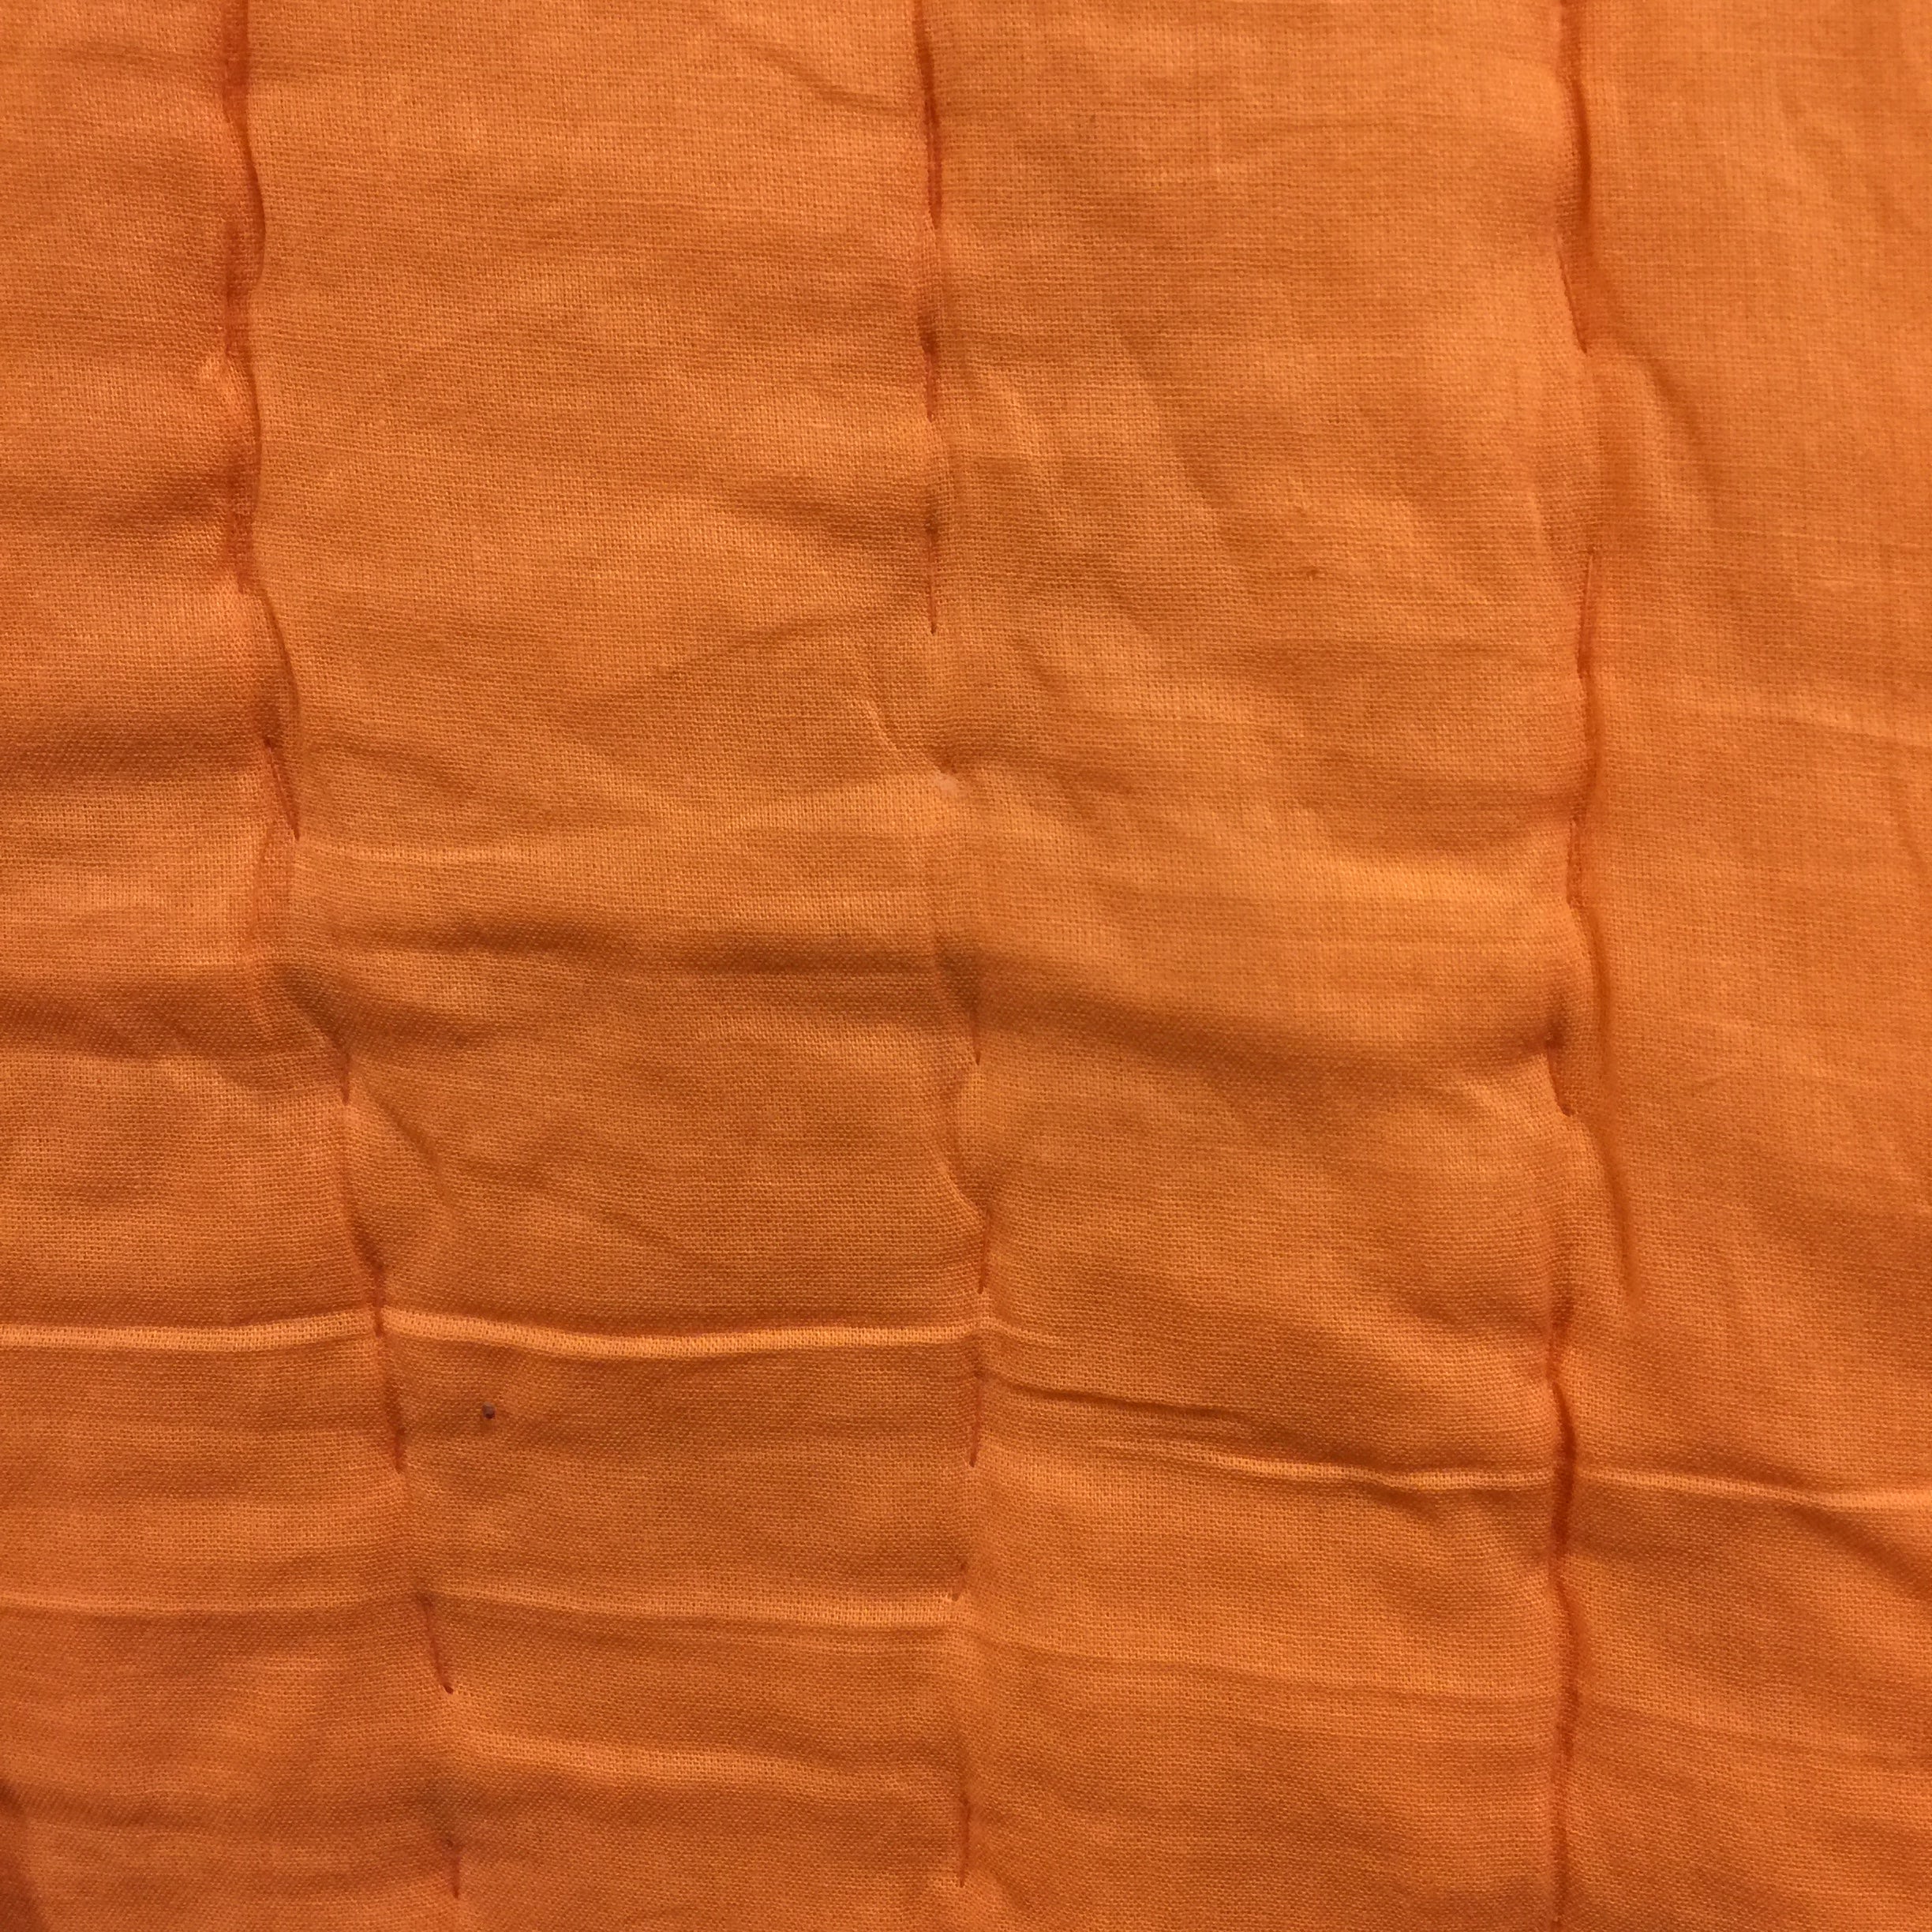 JM Twin Block Print Quilt Orange - Vintage India NYC